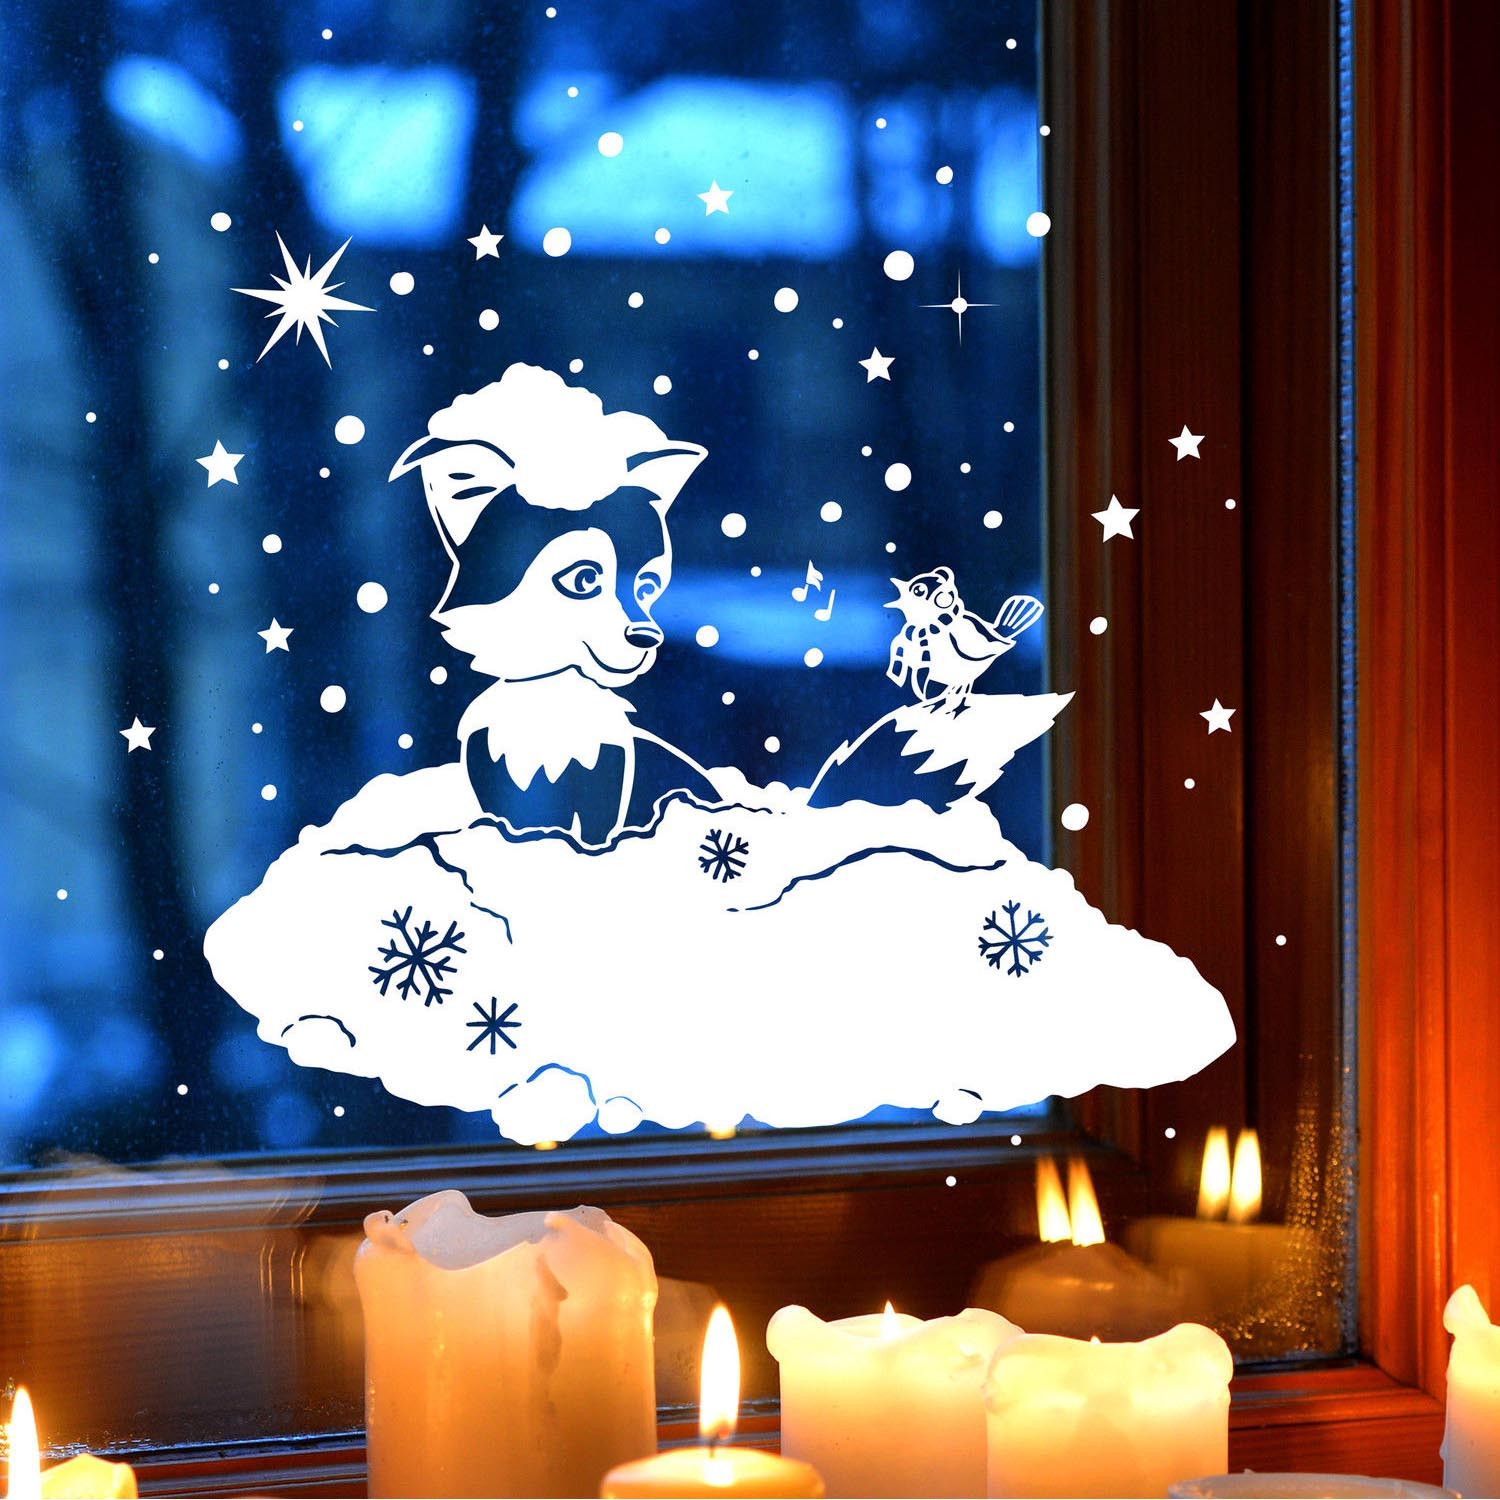 На окно картинки: Картинки новогодние на окна ( 45 фото) 🔥 Прикольные картинки и юмор